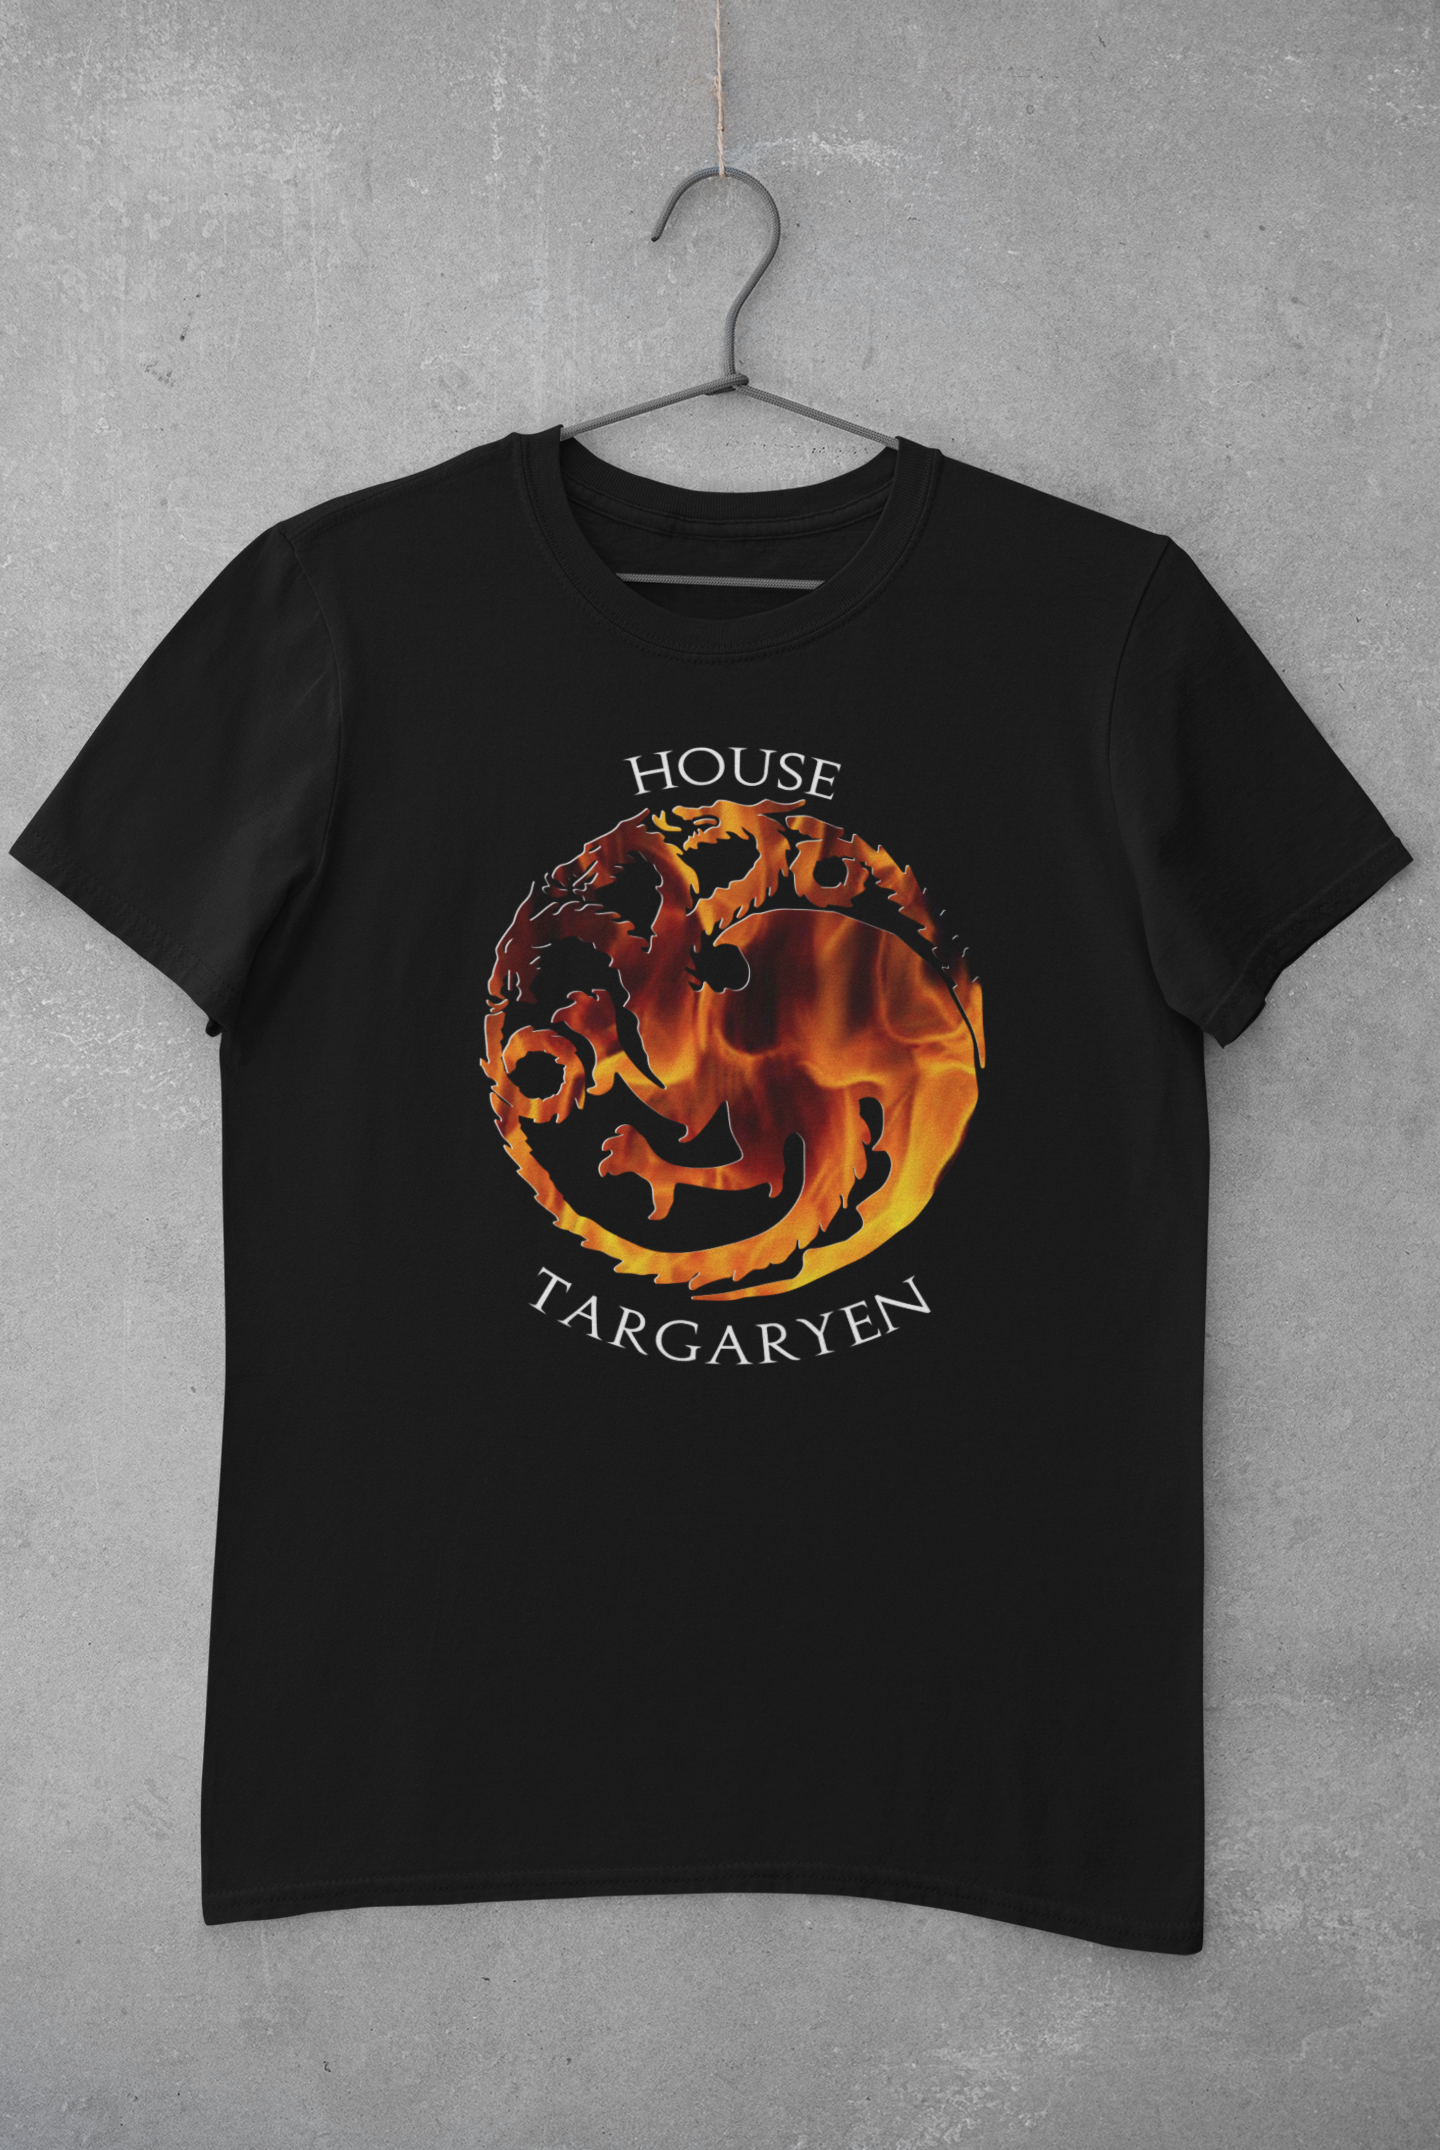 HOUSE TARGARYEN Graphic Dragon T Shirt